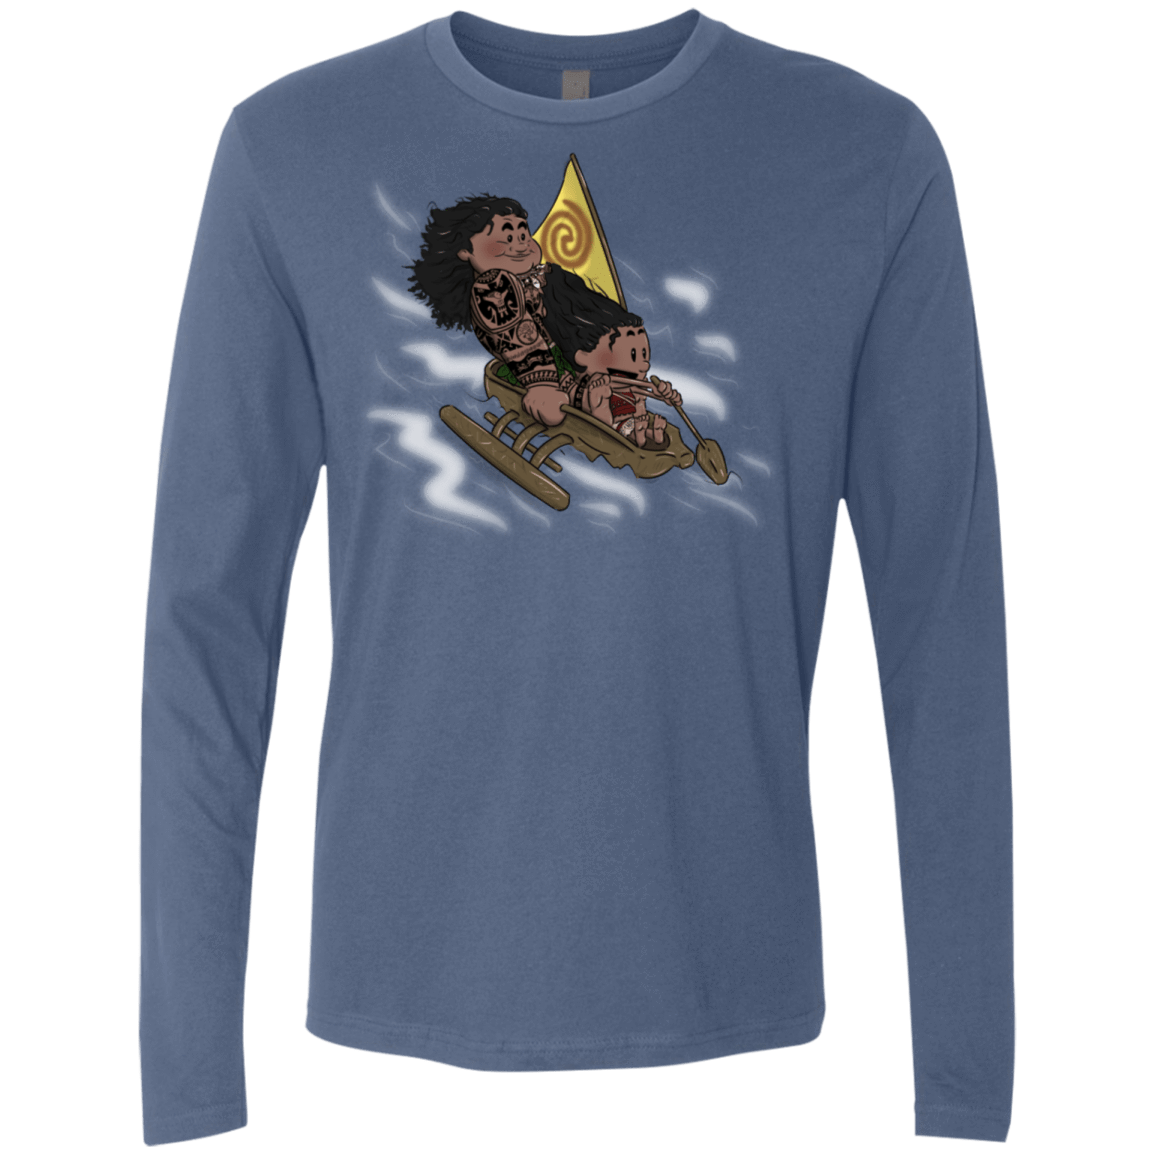 T-Shirts Indigo / S Cross to The Ocean Men's Premium Long Sleeve